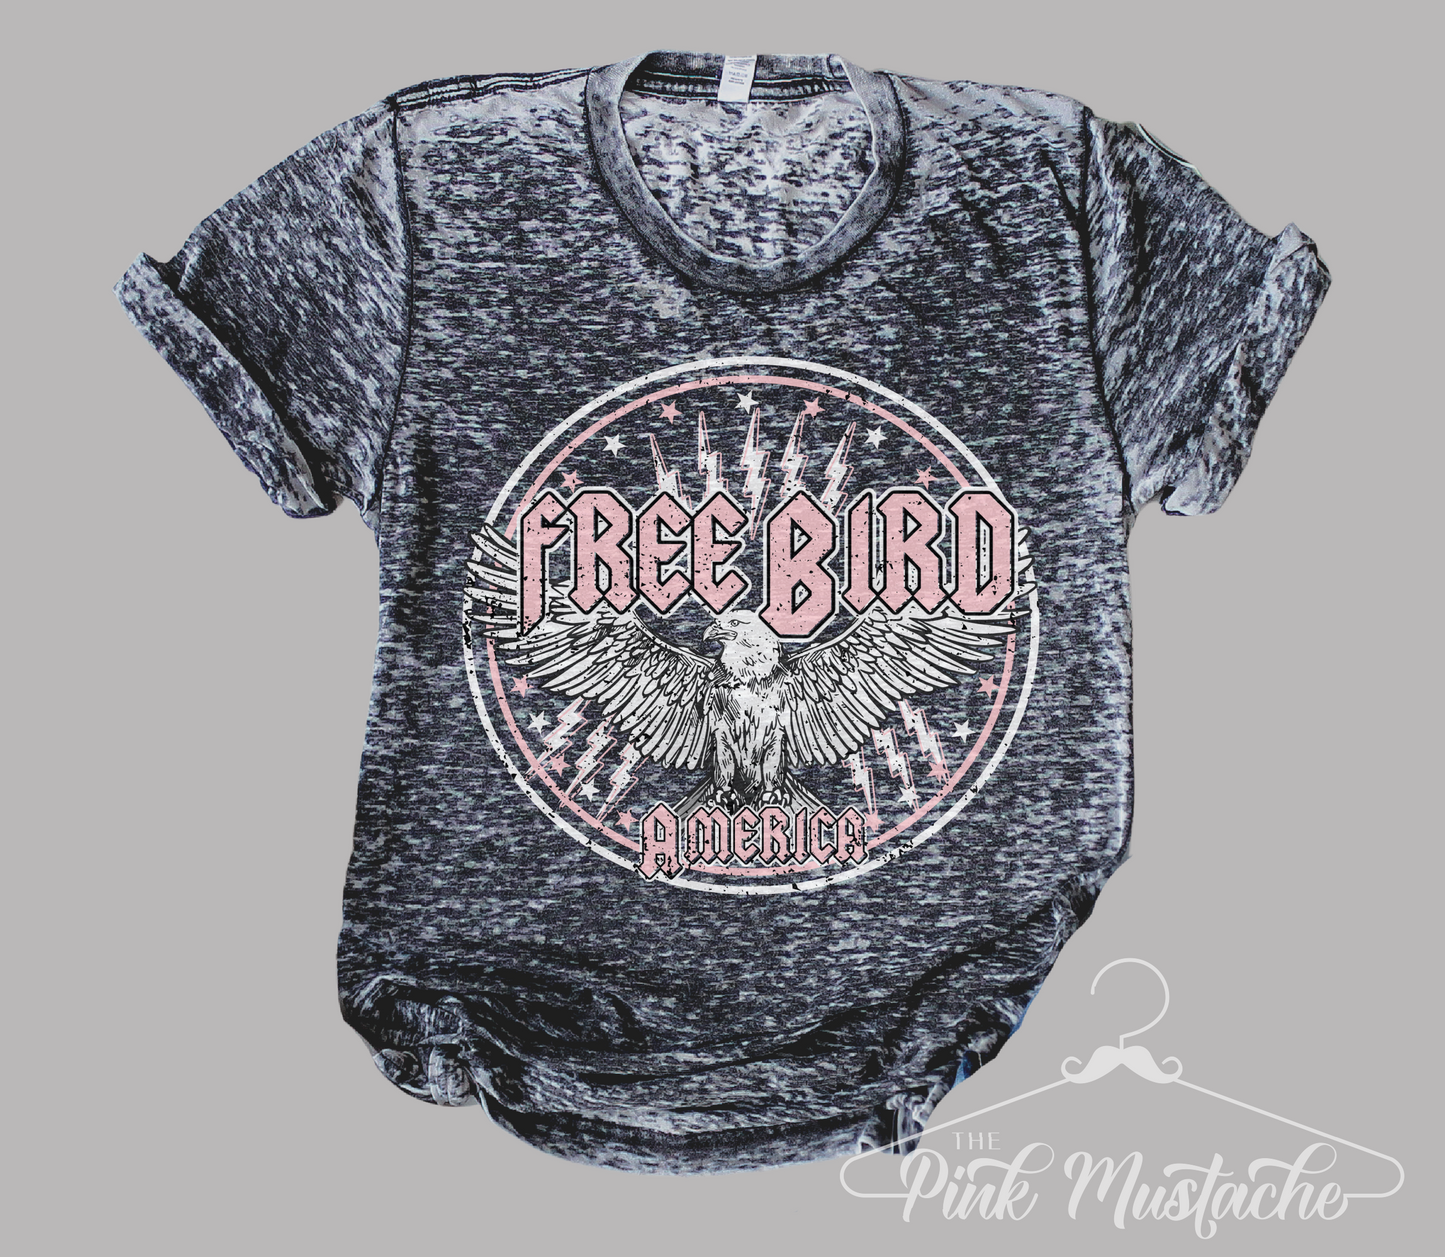 Acid Washed Free Bird Soft style Hippie Rocker Tee/ Super Cute Dyed Rocker Tees - Unisex Sized/ Vintage Rock N Roll Styled Hippie Shirt/ Rock Band